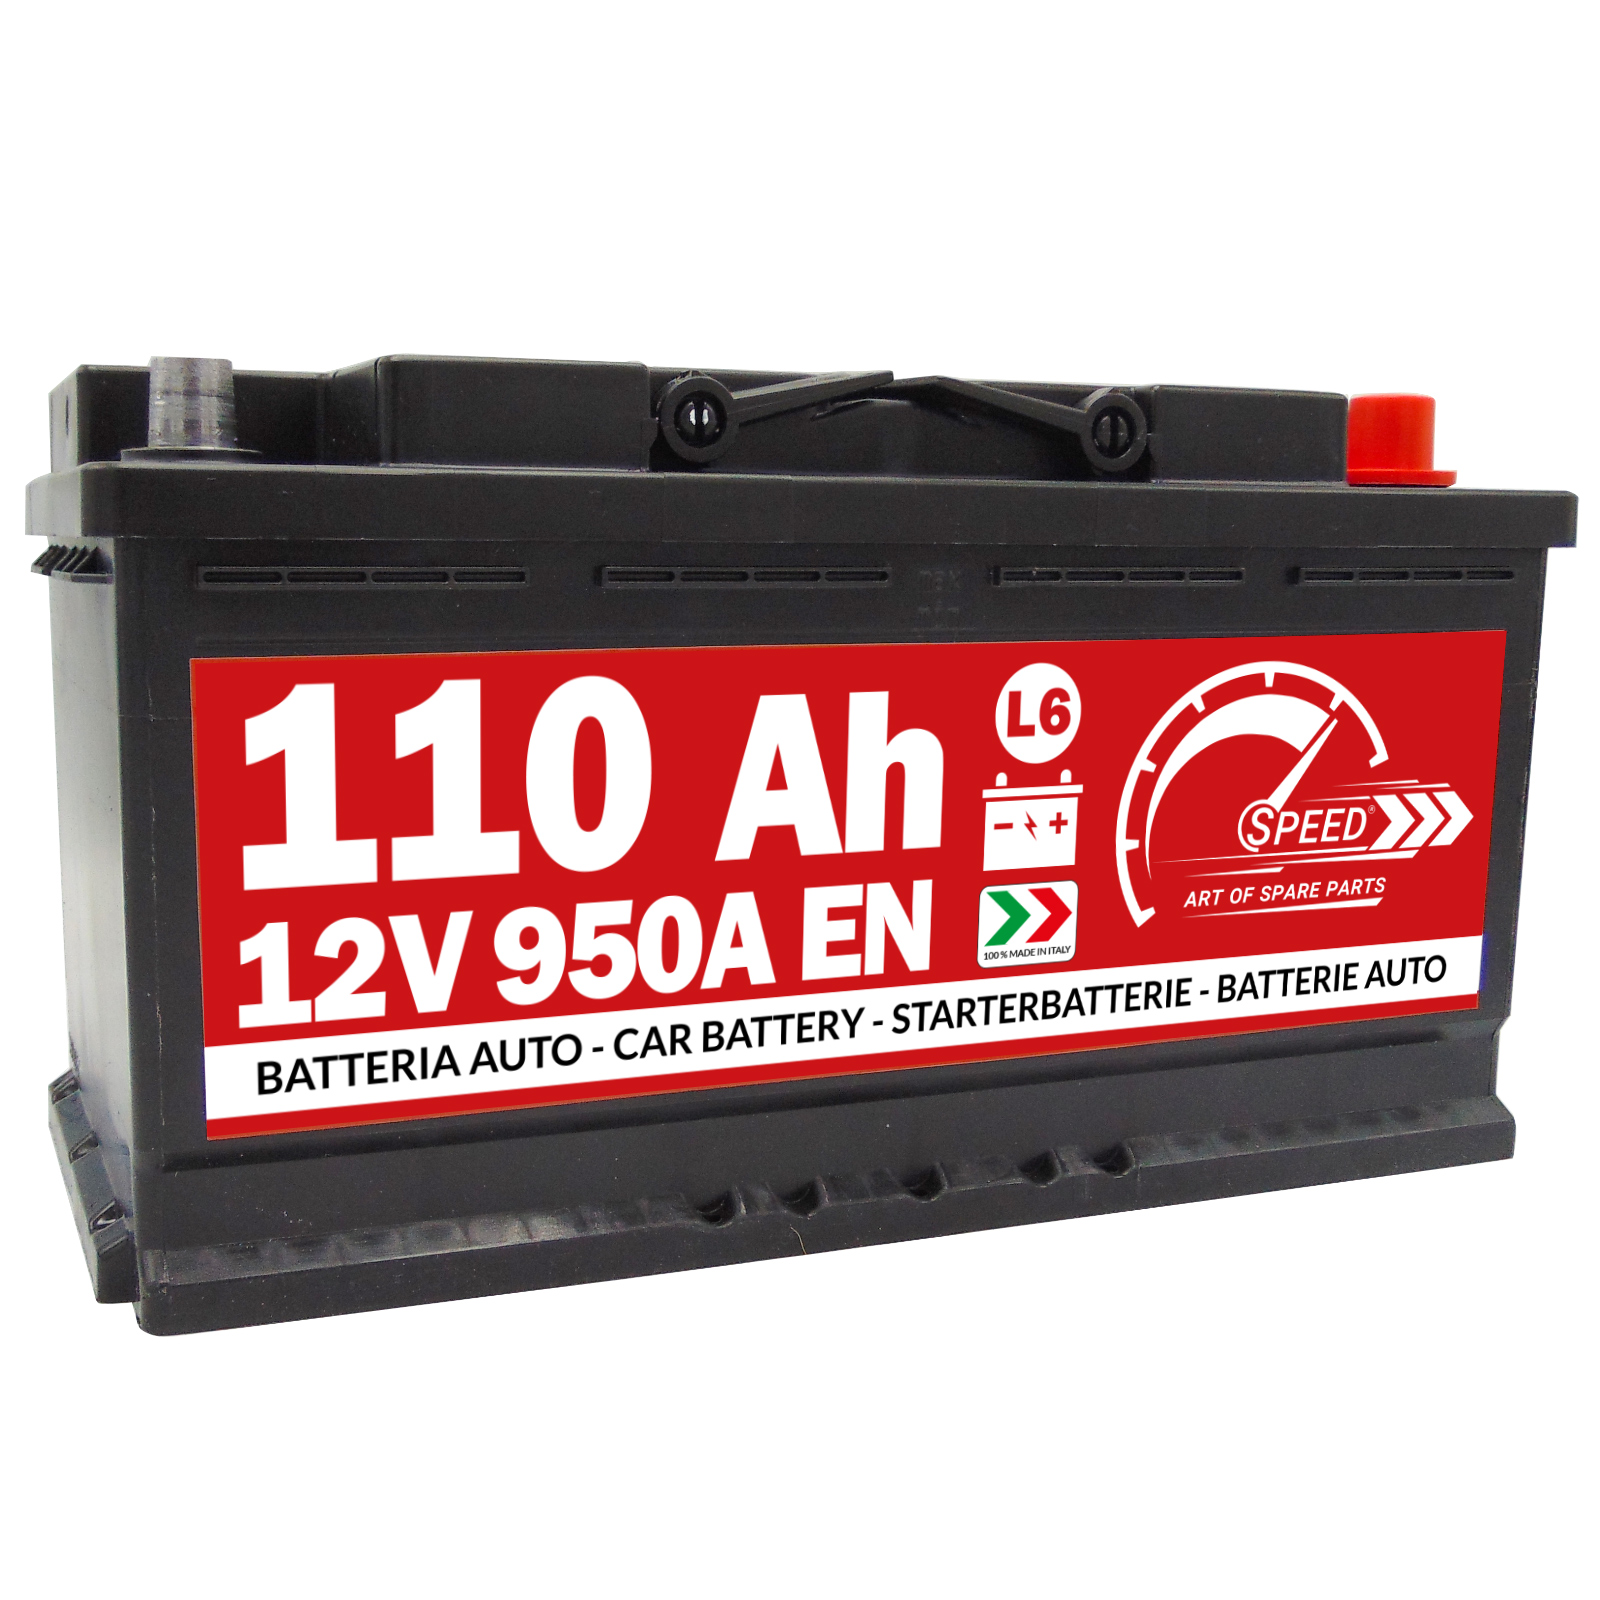 Batteria auto Speed 110Ah L6 950A 12V - Ricambi auto SMC